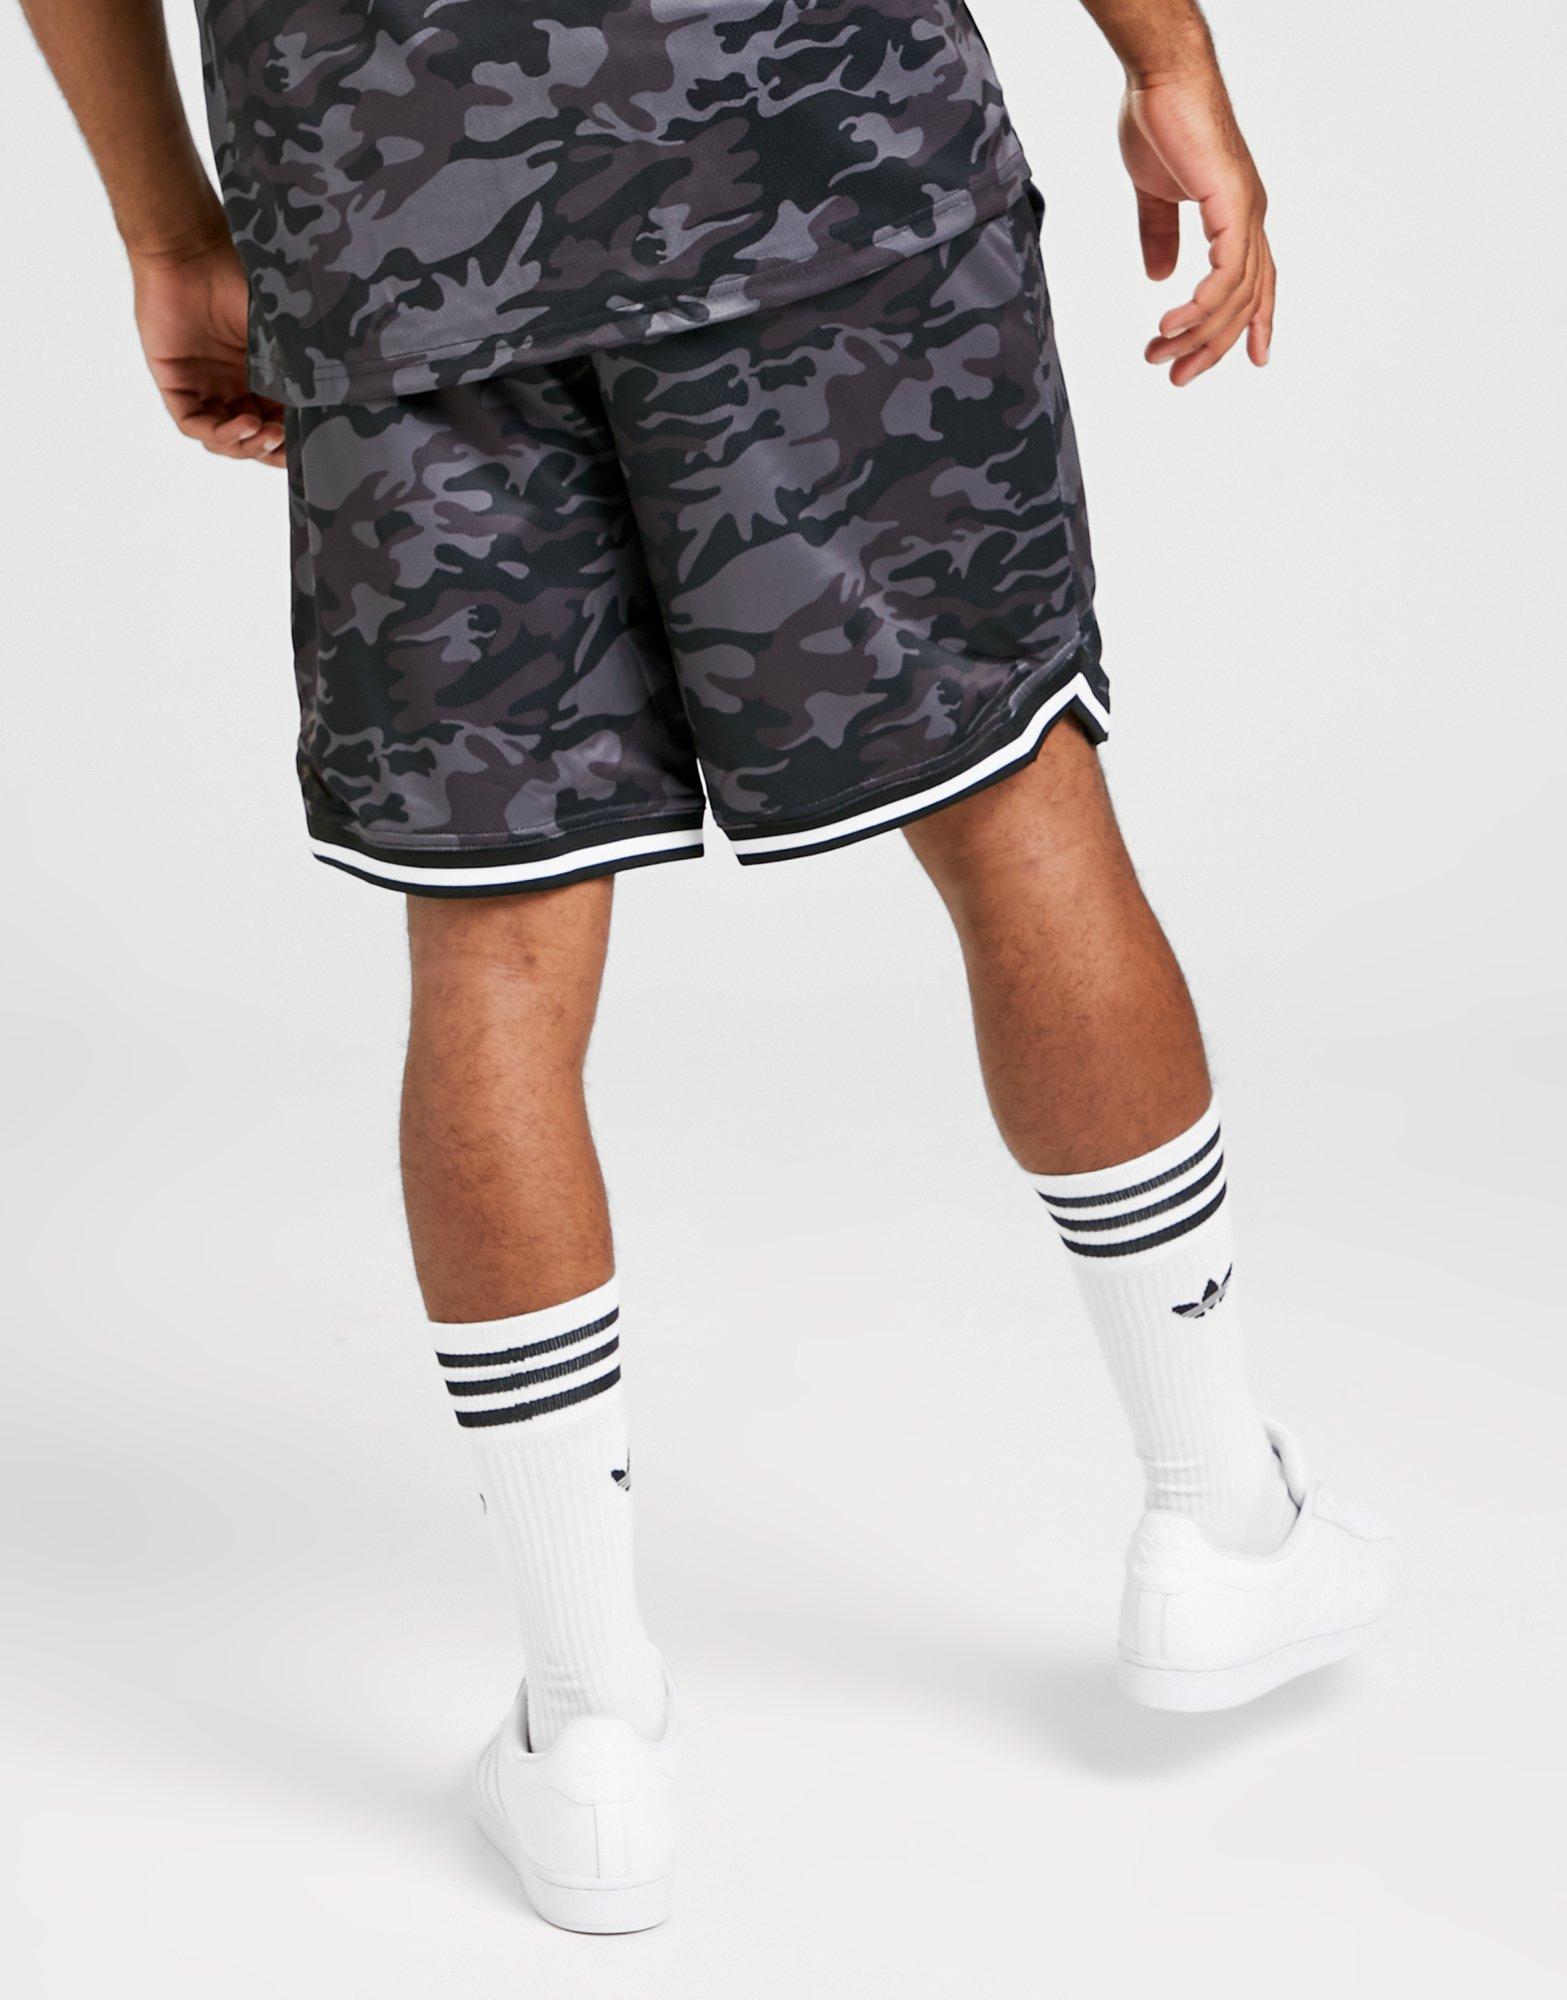 صفر vans with basketball shorts 